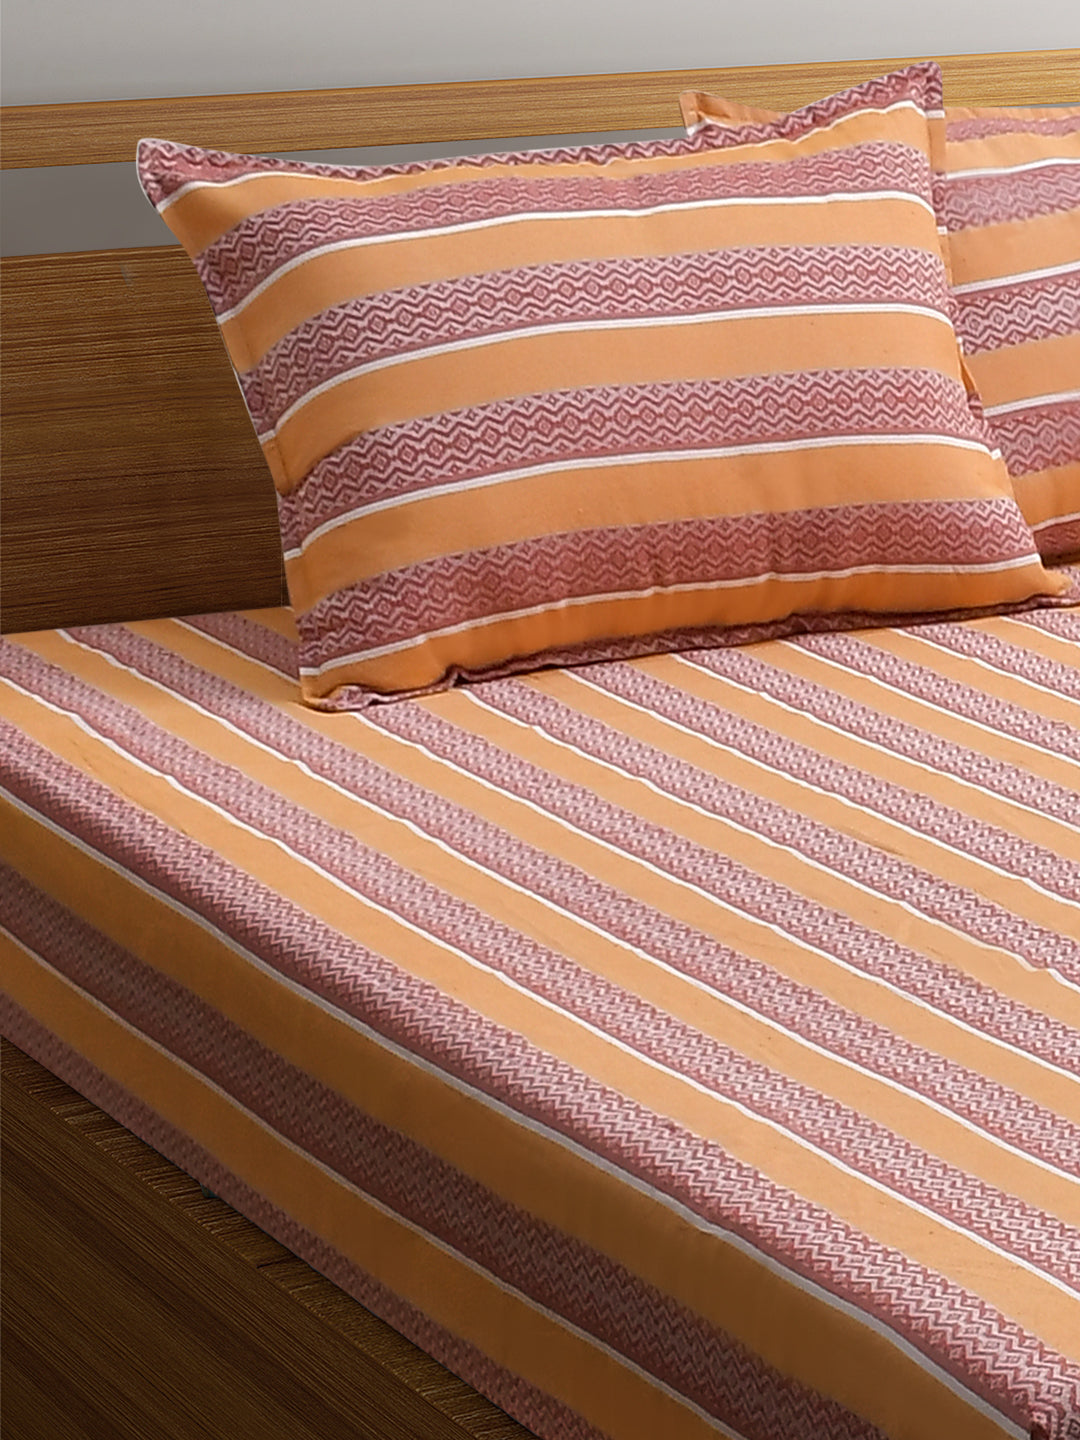 Sunrise Jacquard Orange Cotton Double Bedsheet with Pillows